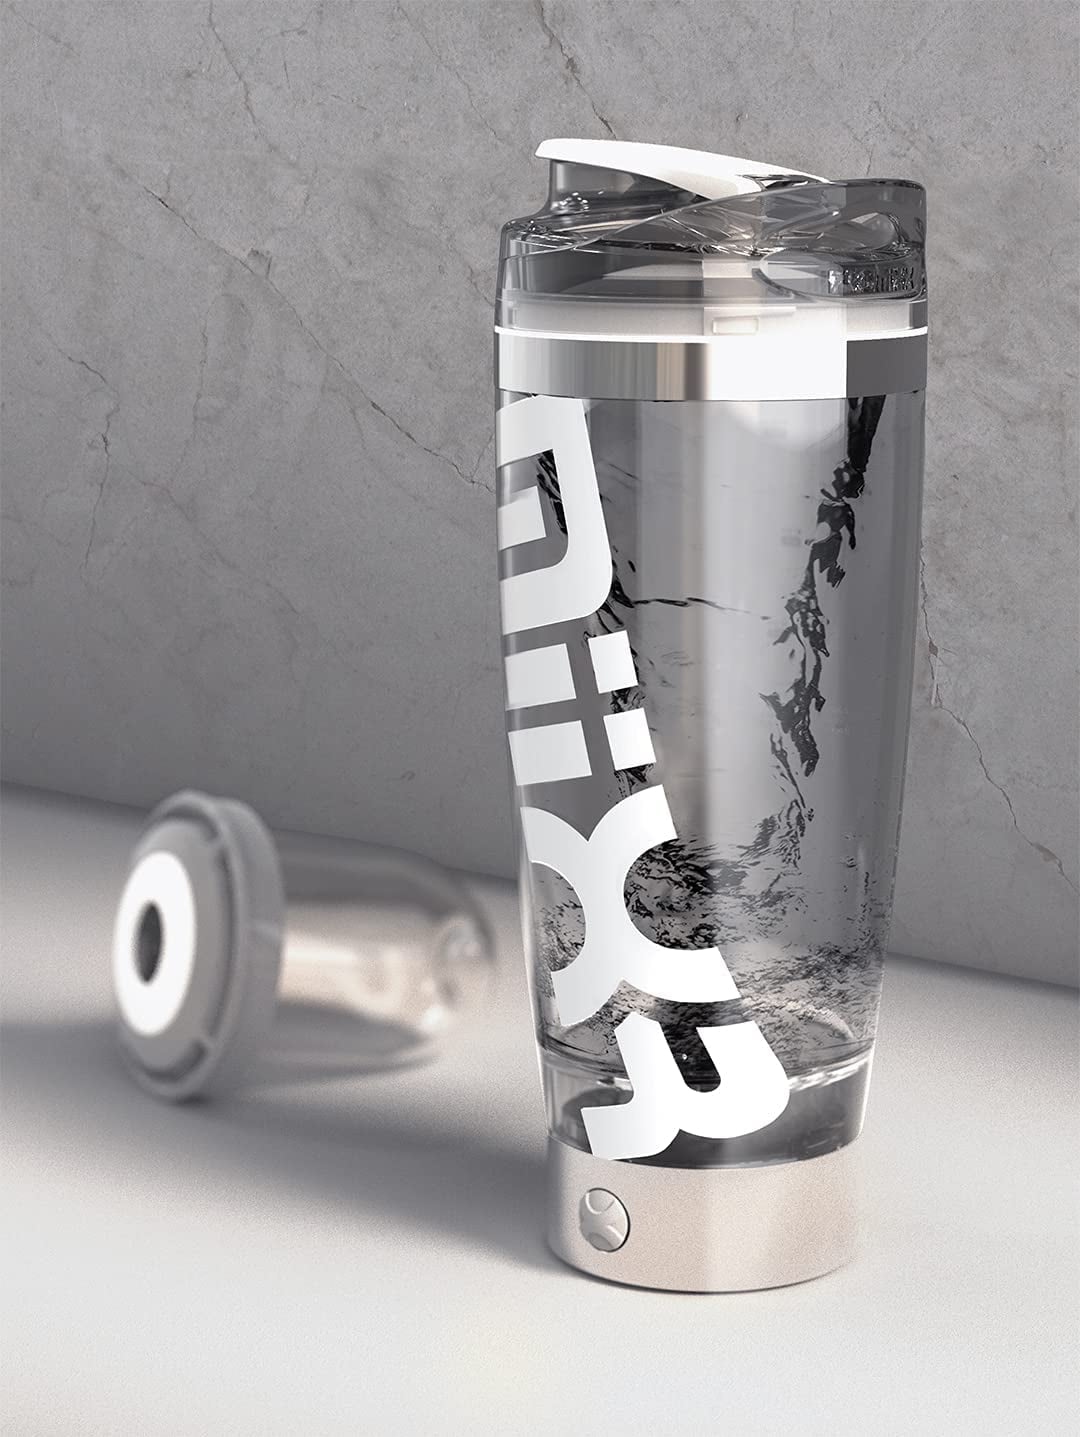 Buy Promixx MiiXR PRO Electric Shaker Bottle, Powerful Mixer